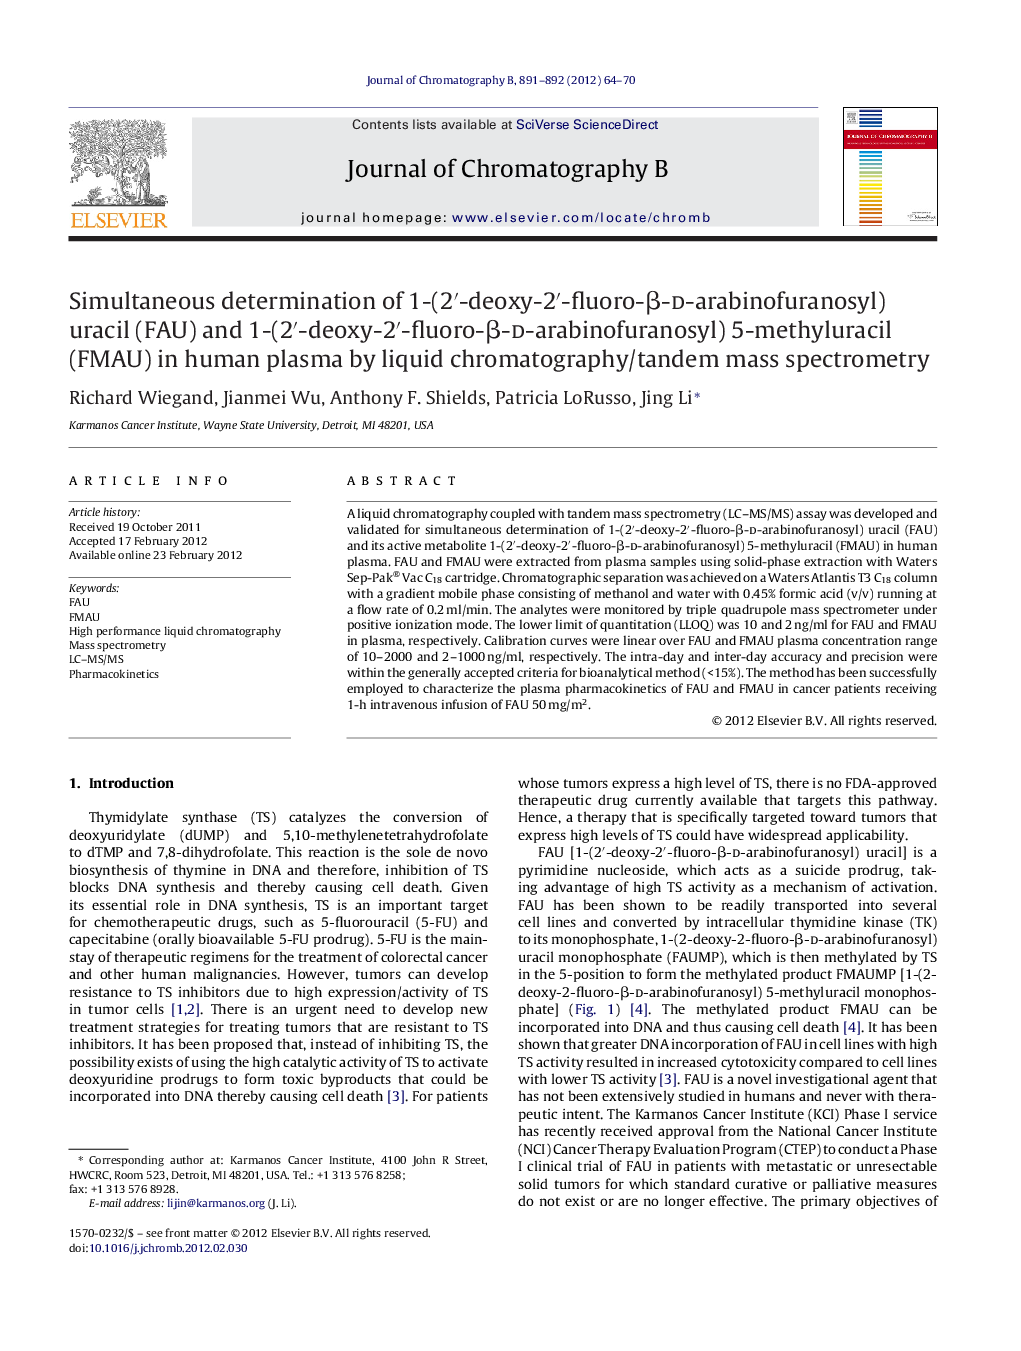 Simultaneous determination of 1-(2′-deoxy-2′-fluoro-β-d-arabinofuranosyl) uracil (FAU) and 1-(2′-deoxy-2′-fluoro-β-d-arabinofuranosyl) 5-methyluracil (FMAU) in human plasma by liquid chromatography/tandem mass spectrometry